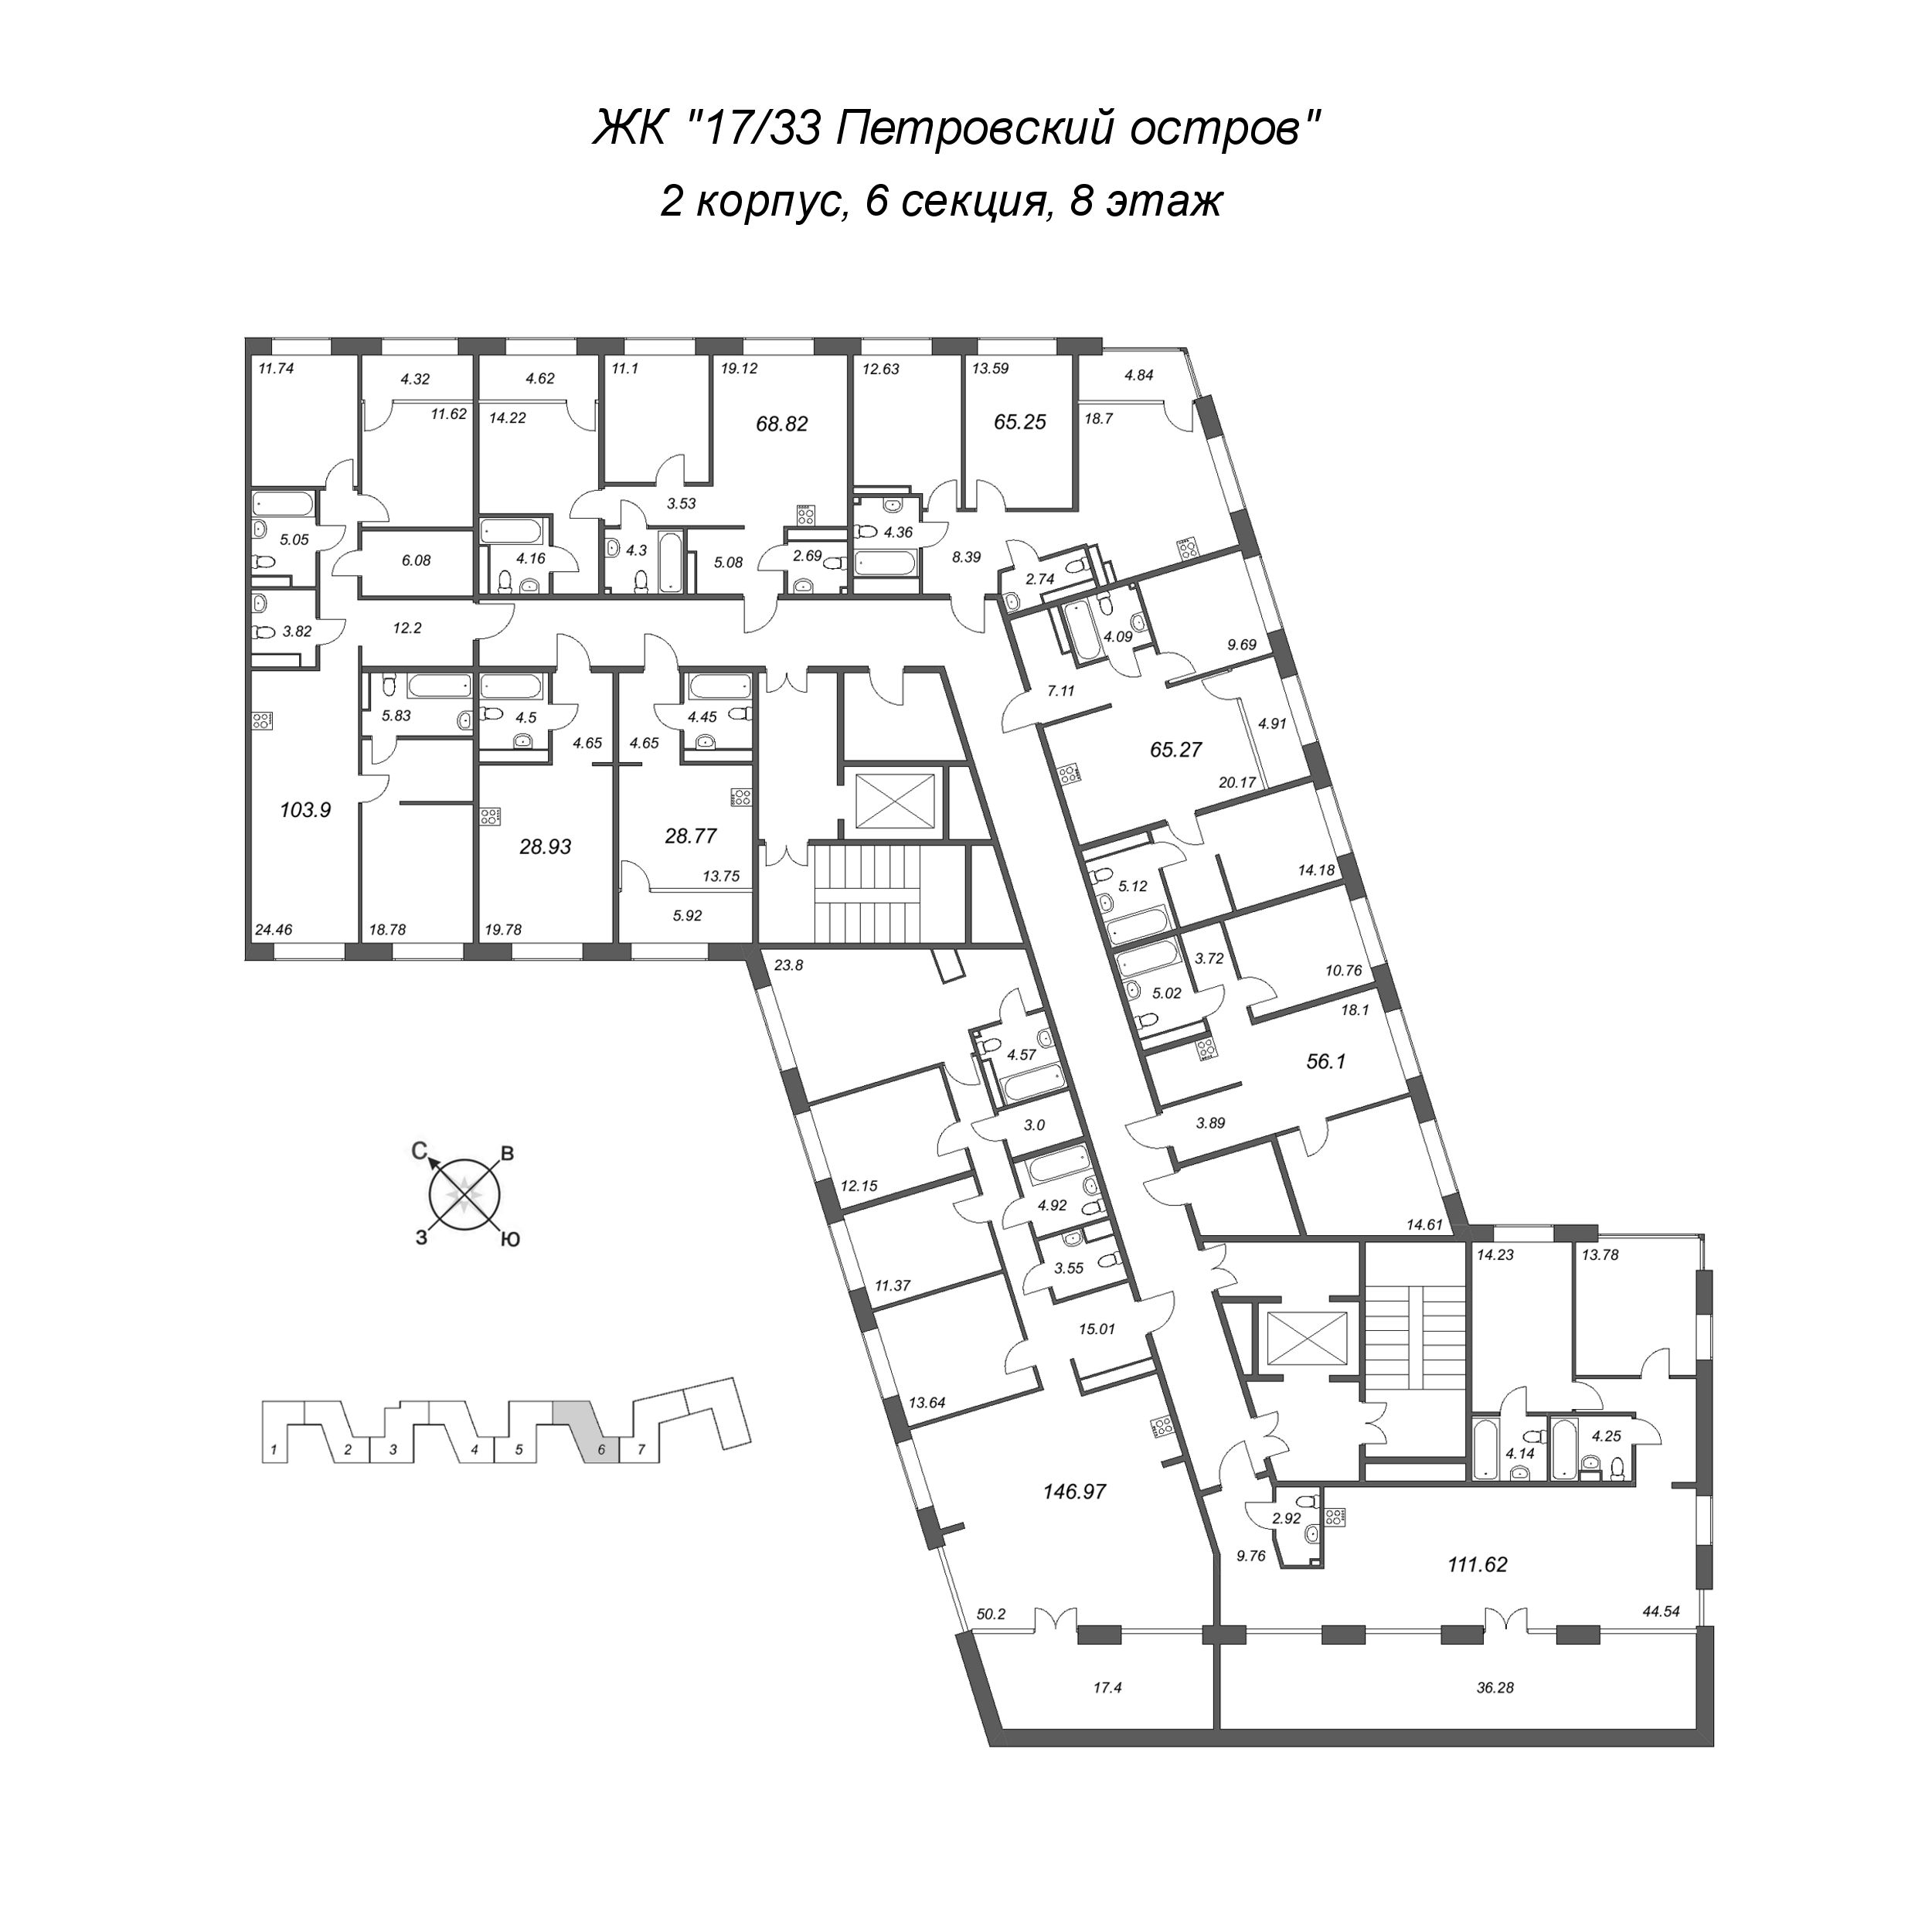 3-комнатная (Евро) квартира, 68.82 м² - планировка этажа